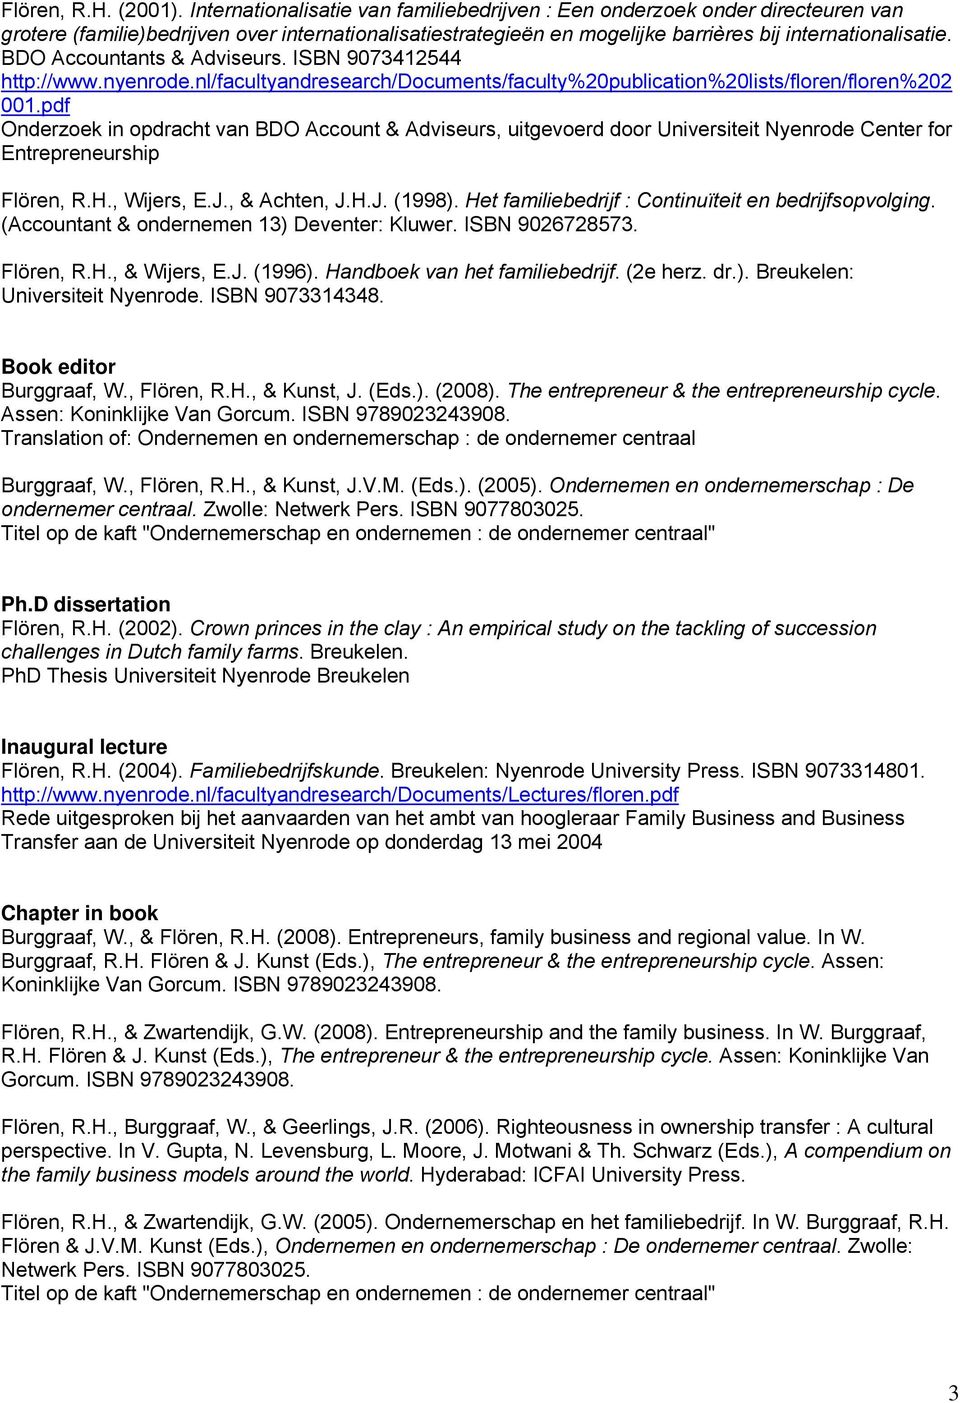 BDO Accountants & Adviseurs. ISBN 9073412544 http://www.nyenrode.nl/facultyandresearch/documents/faculty%20publication%20lists/floren/floren%202 001.